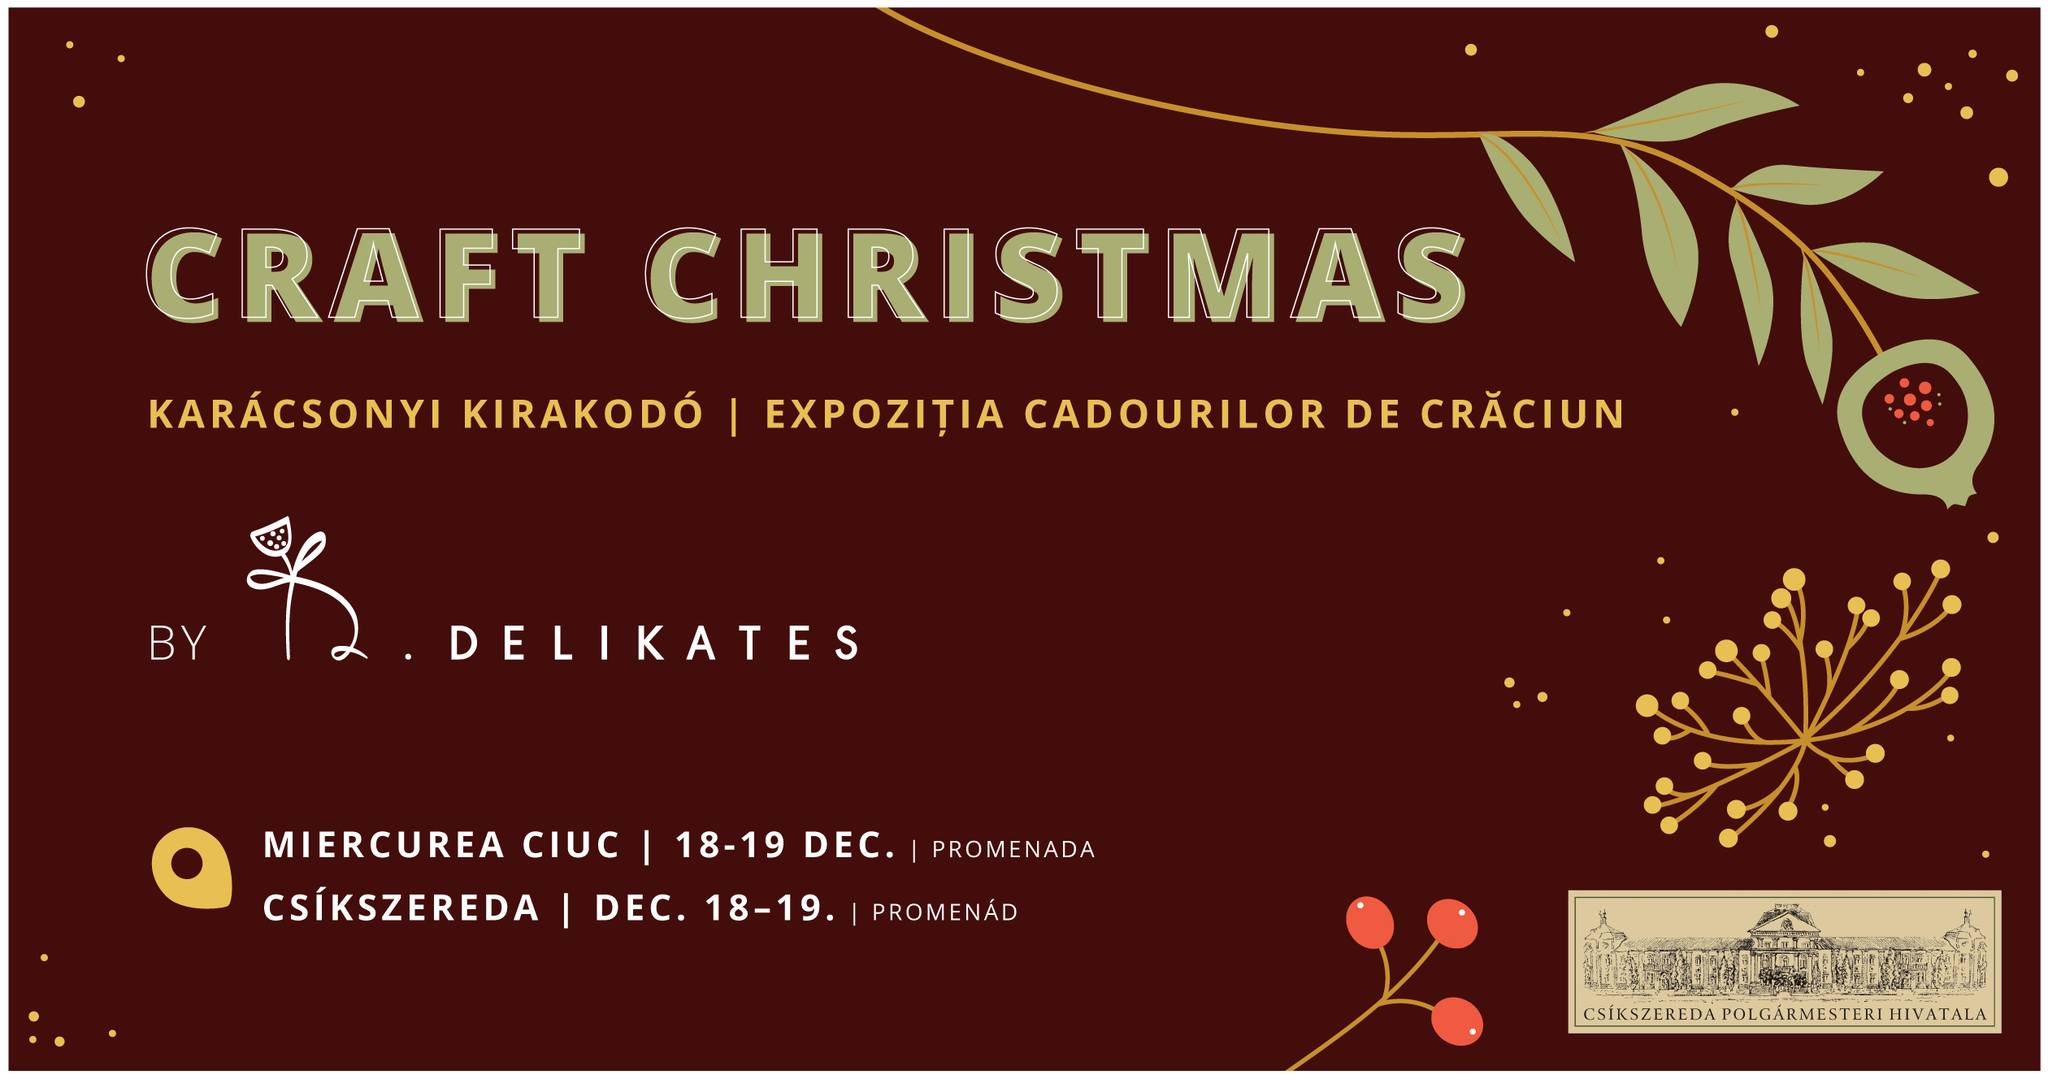 Craft Christmas by Delikates - Miercurea Ciuc